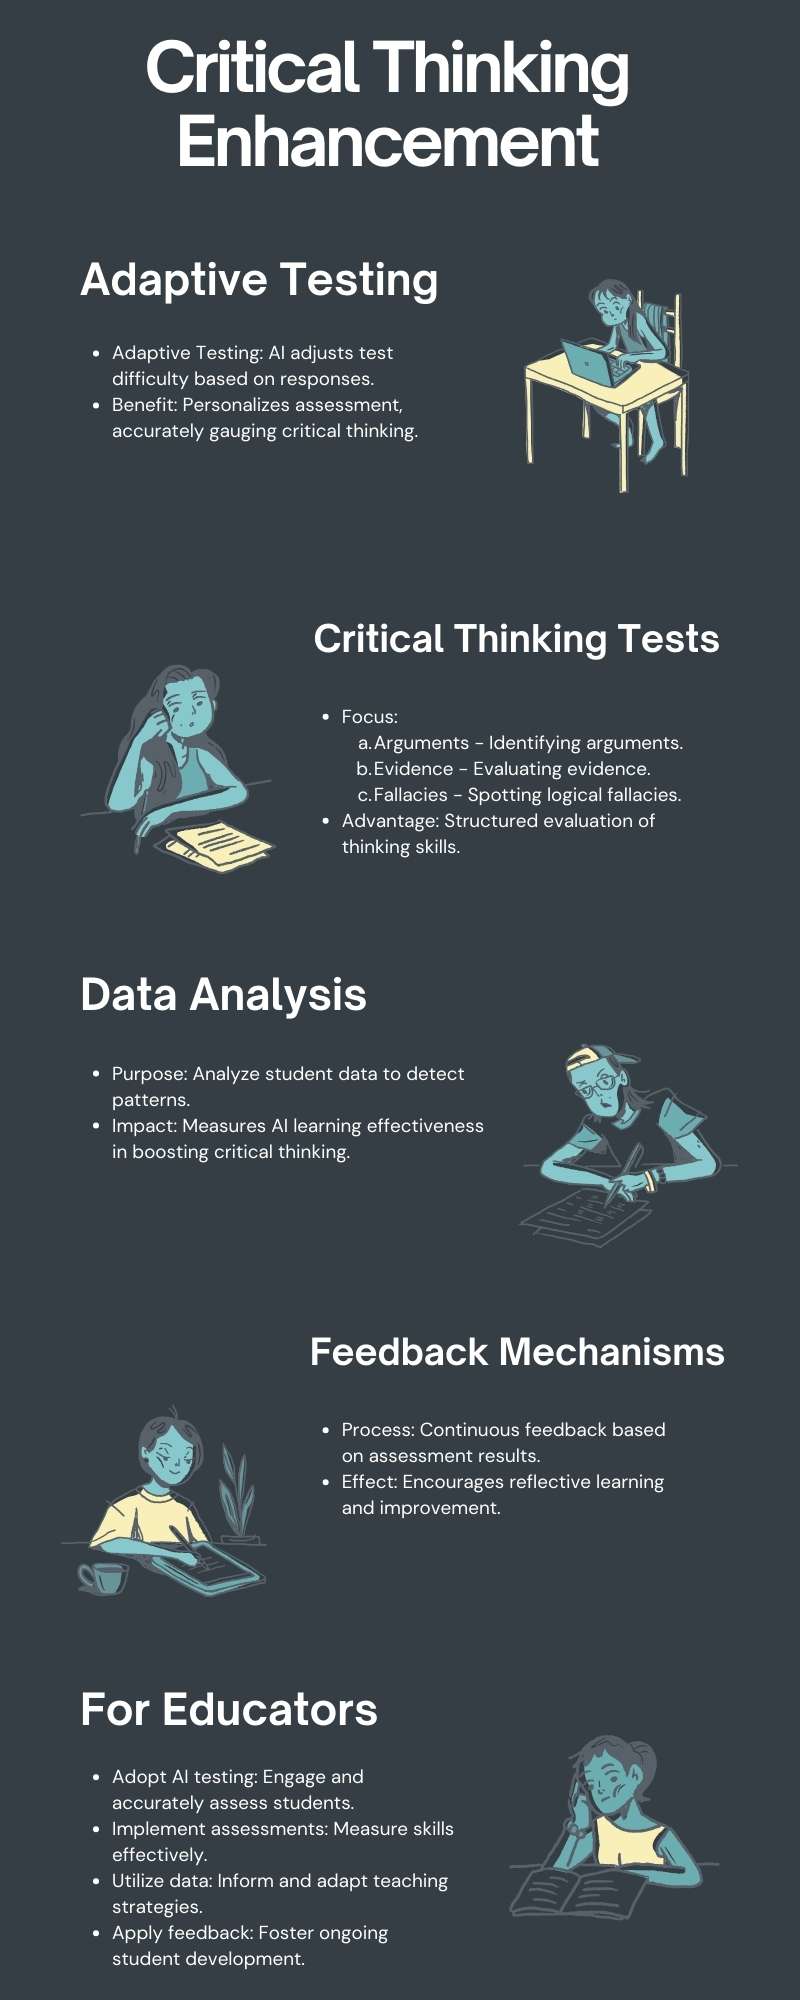 critical thinking and AI